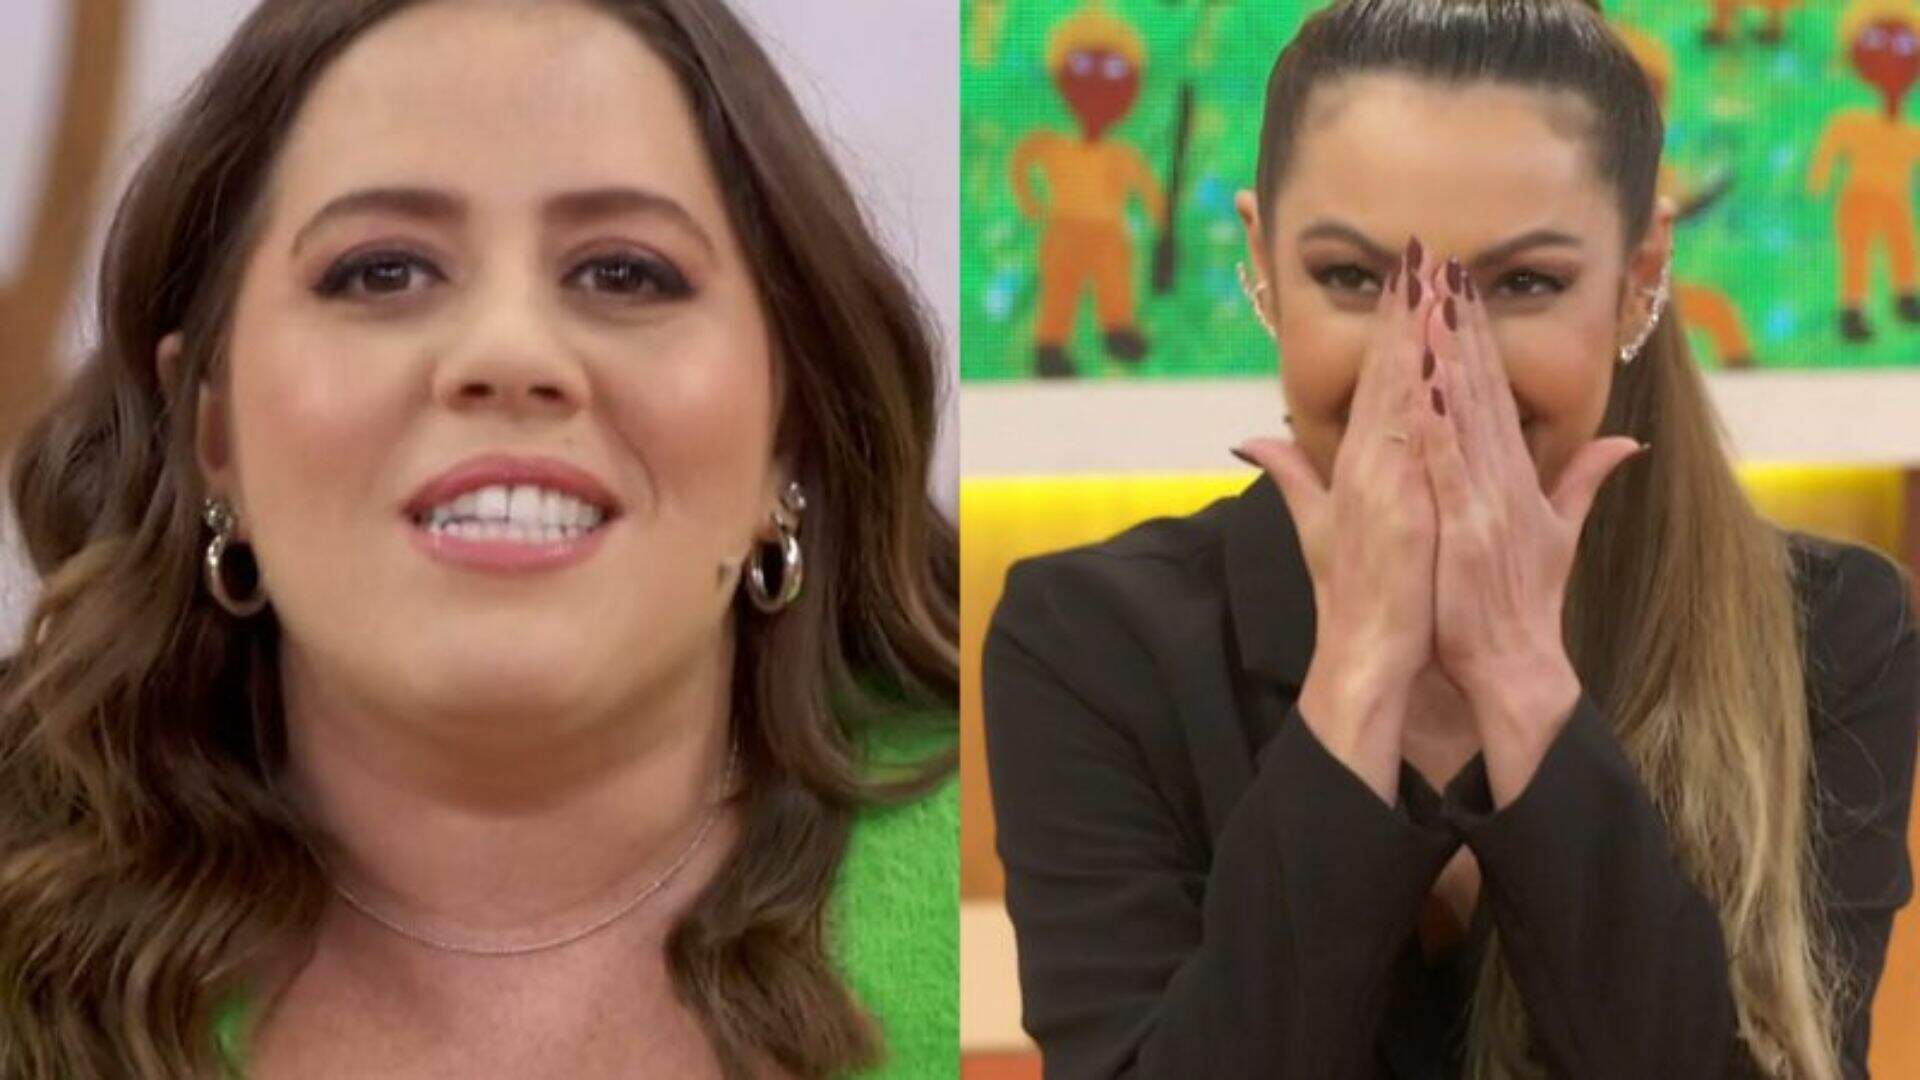 Ao vivo durante o “Encontro”, Tati Machado deixa Patrícia Poeta constrangida ao expor vídeo antigo da apresentadora